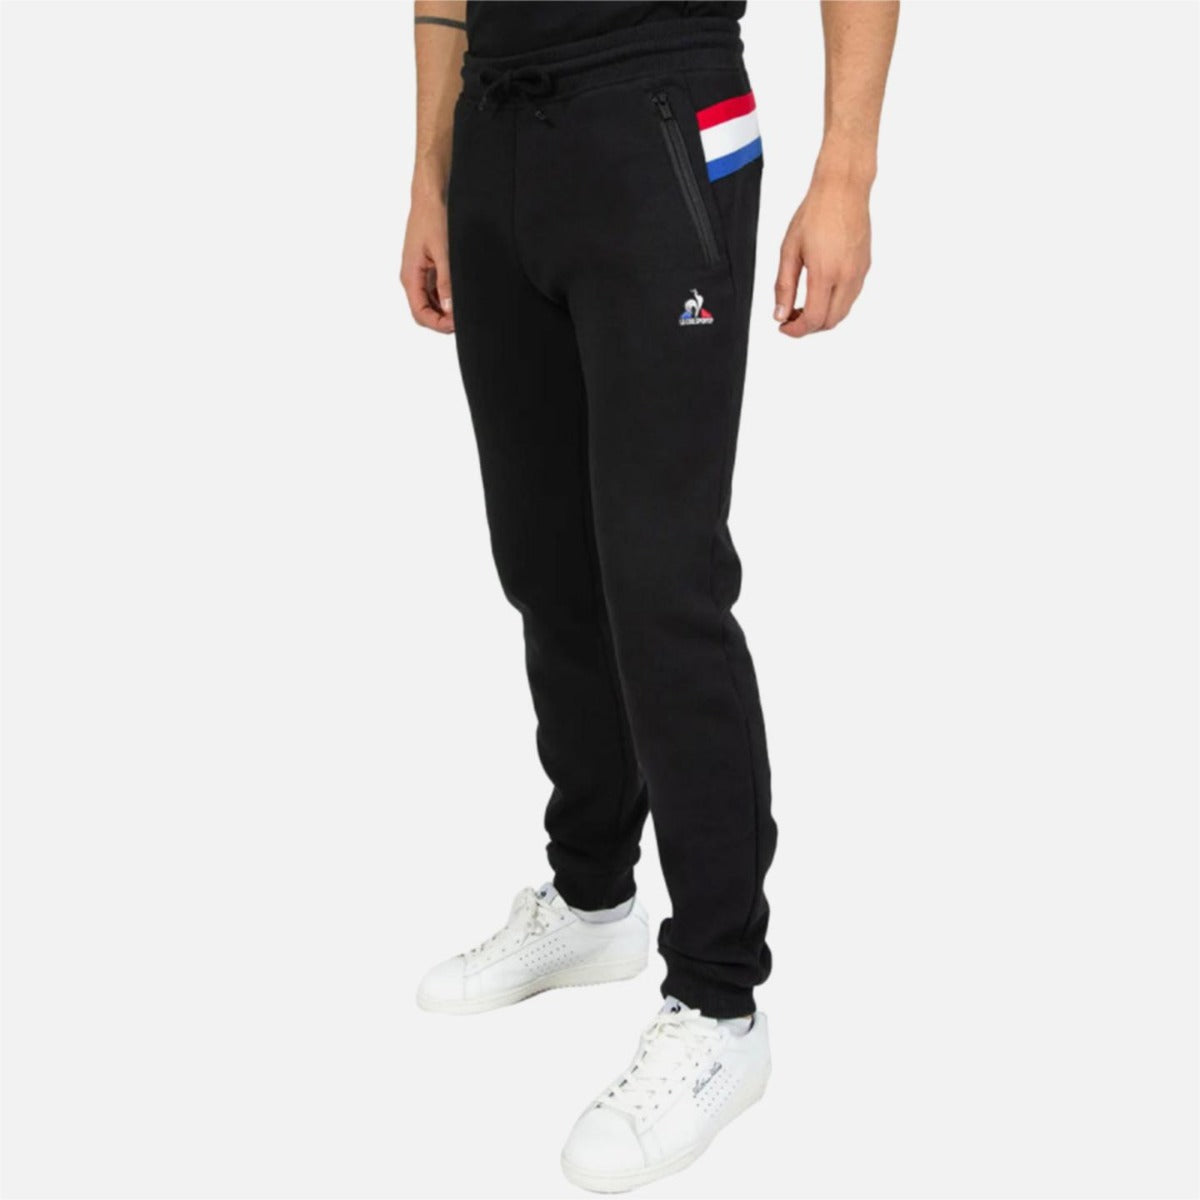 Pantalon Le Coq Sportif Tricolore - Noir